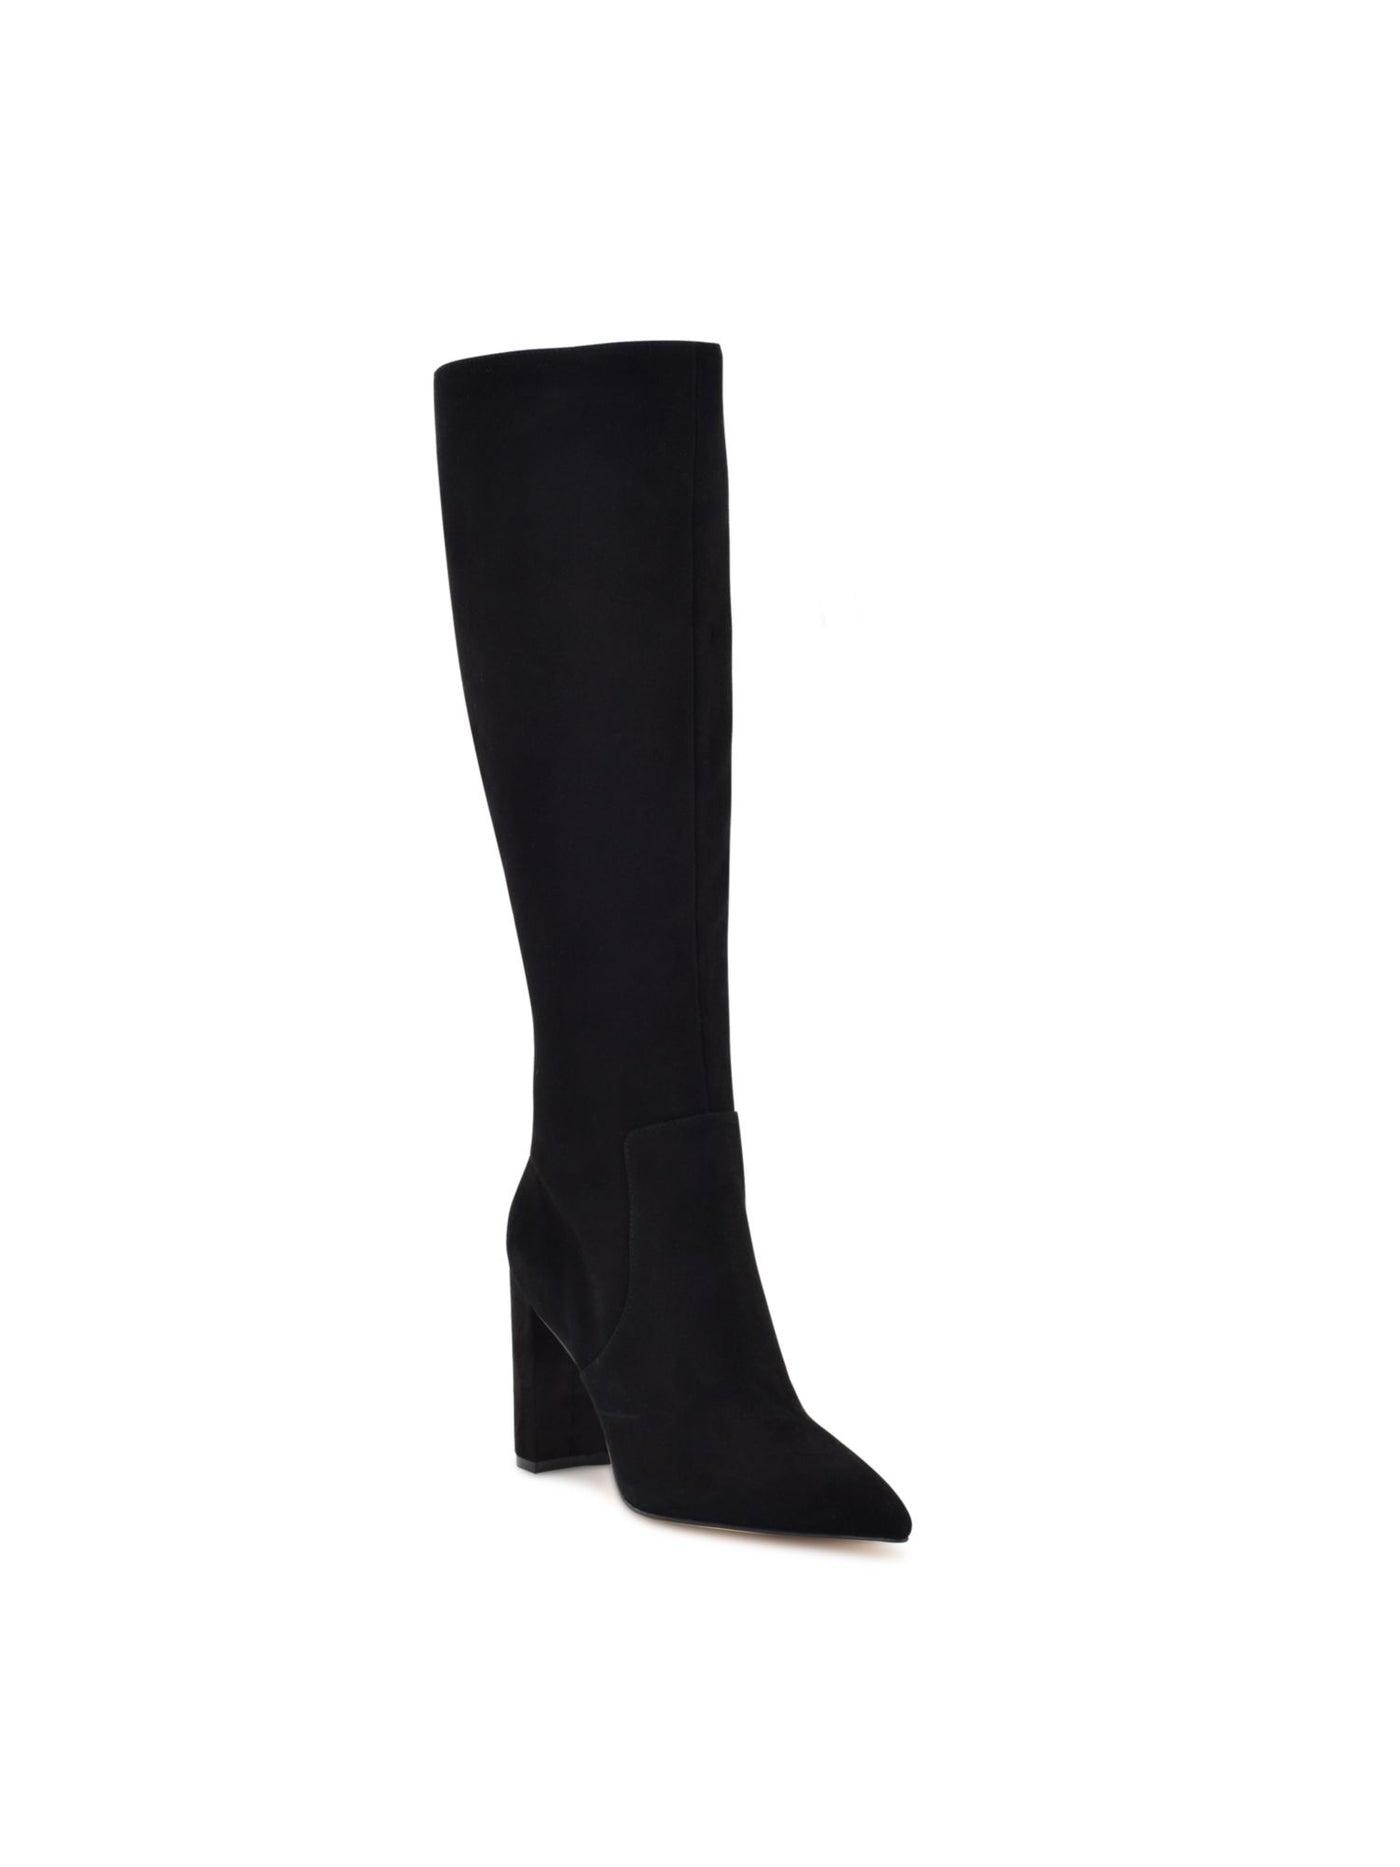 NINE WEST Womens Black Goring Padded Danee Pointed Toe Block Heel Zip-Up Leather Dress Boots 10.5 M